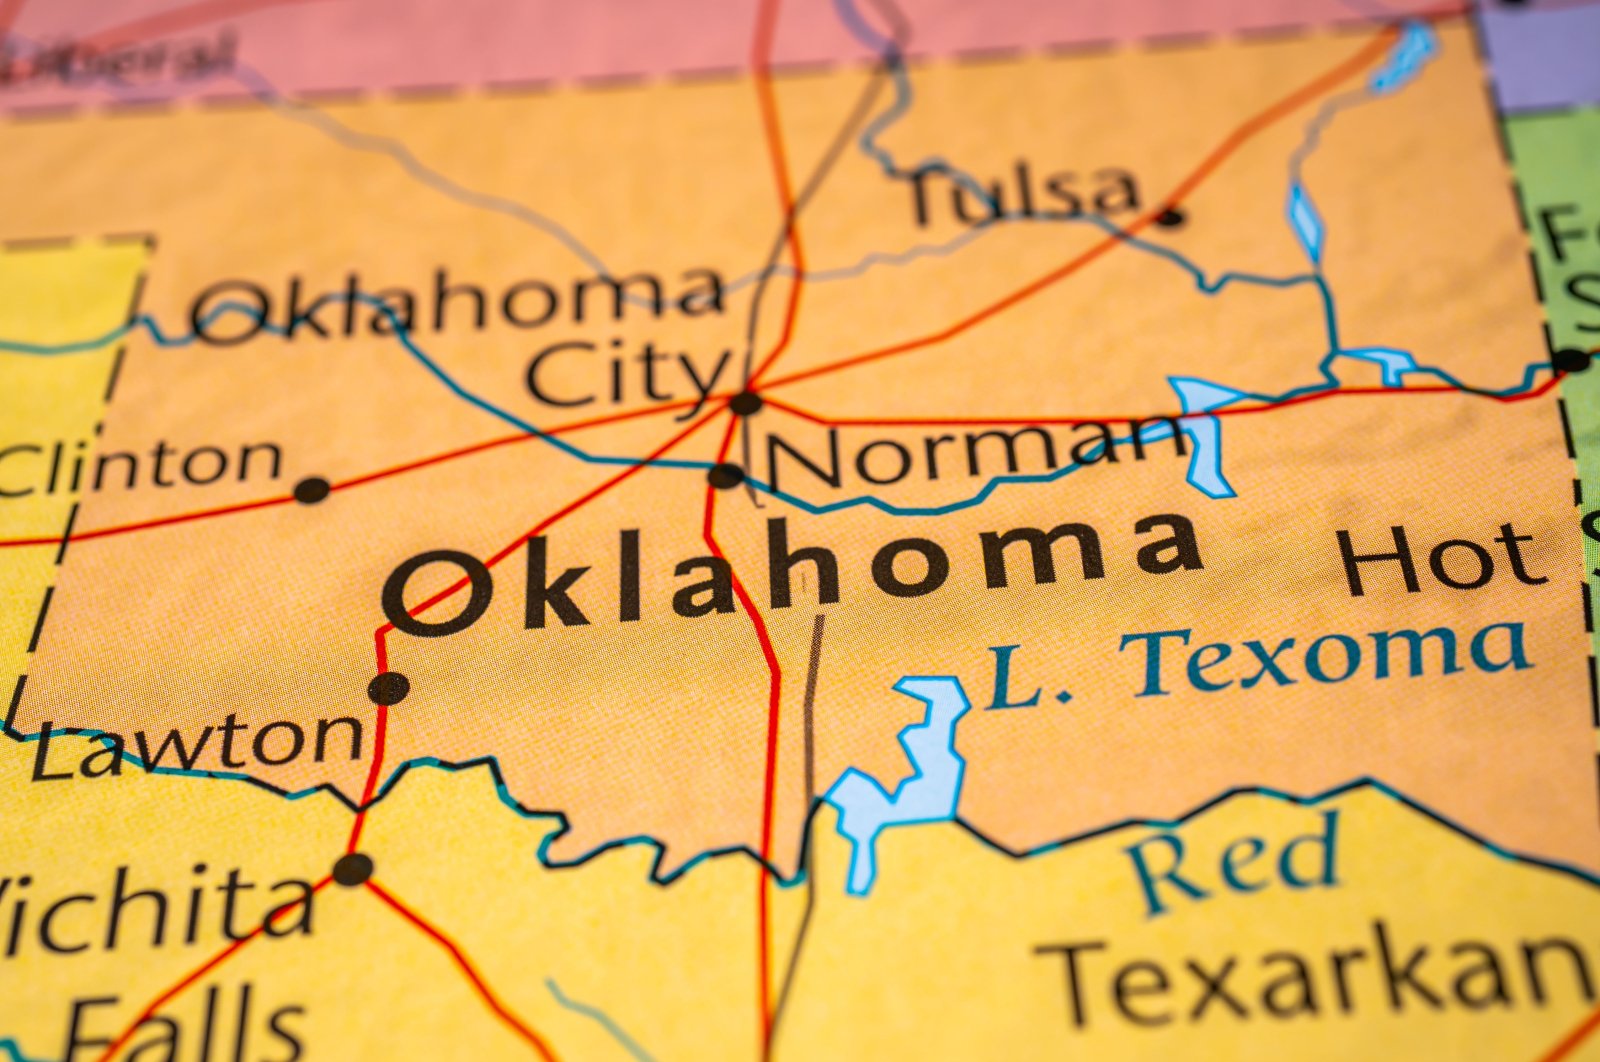 Pencarian remaja yang hilang mengarah ke 7 mayat di kota Oklahoma